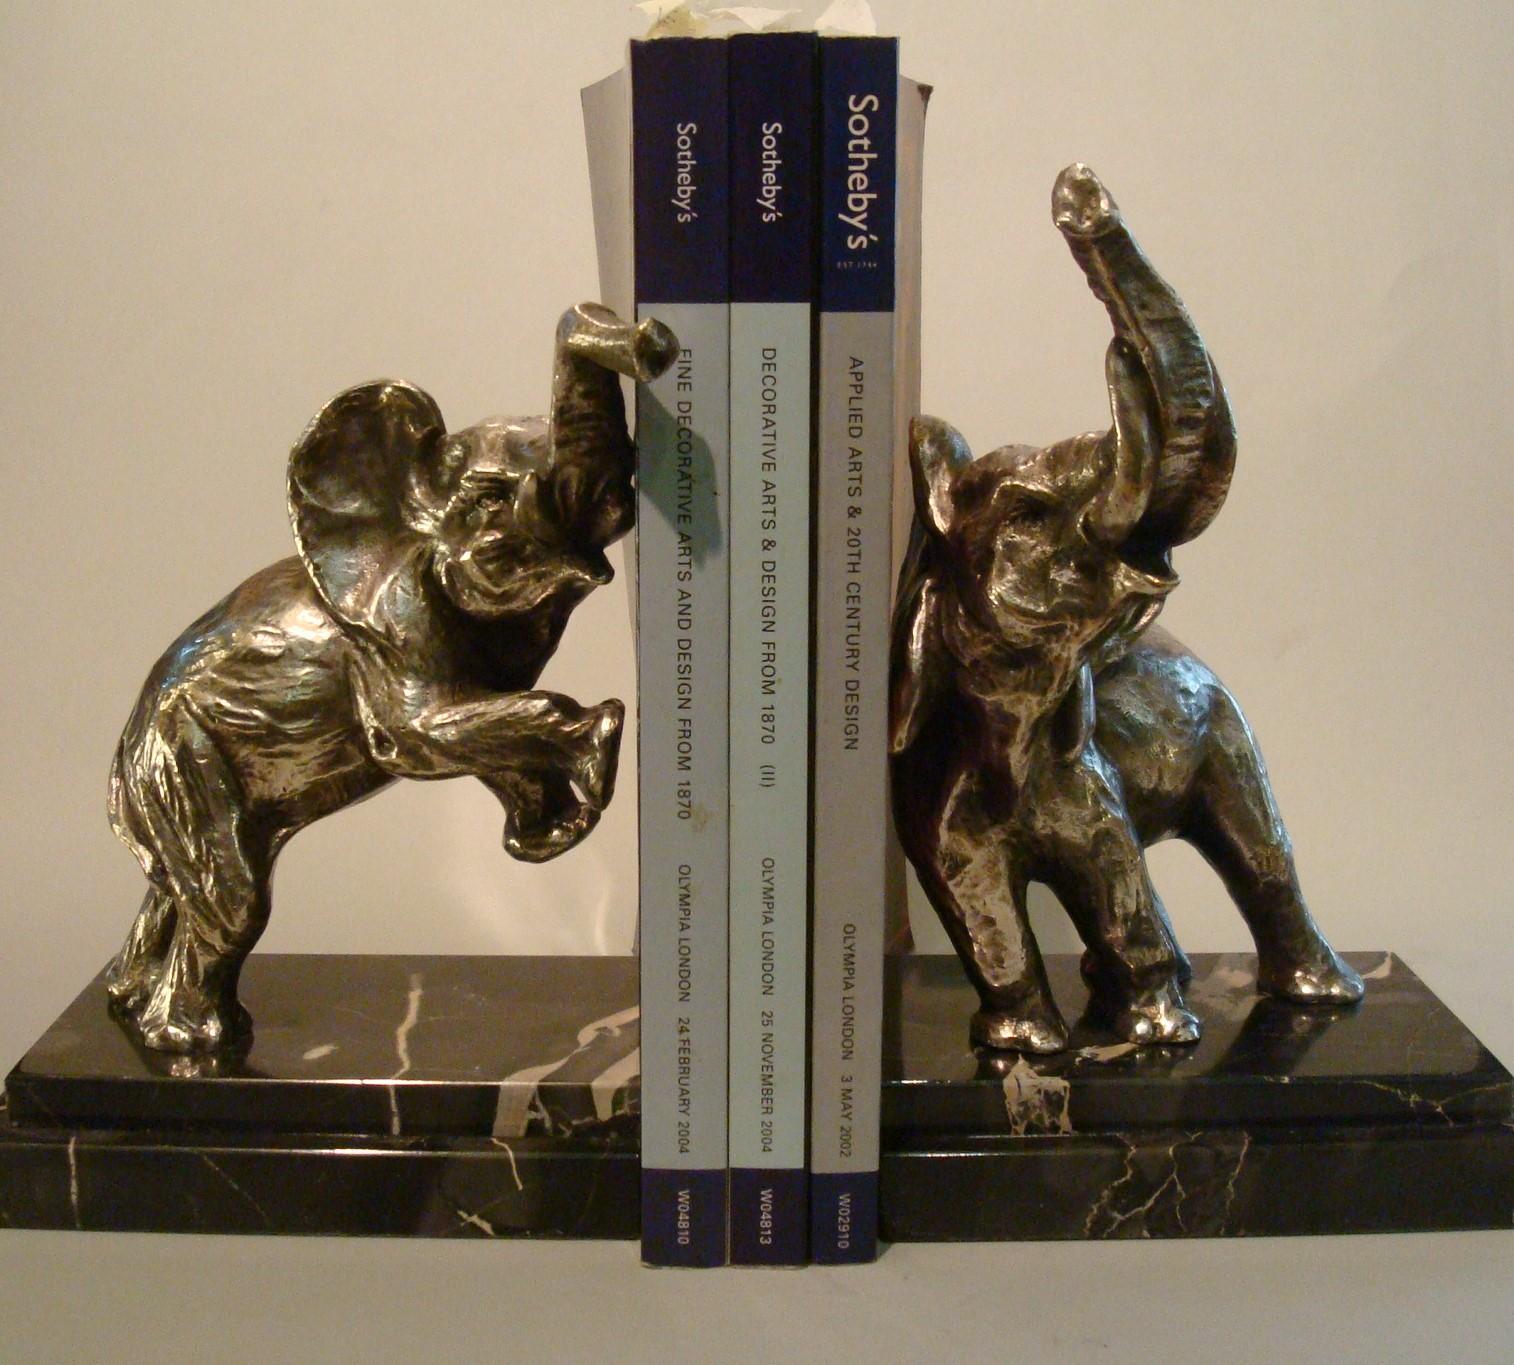 Art Deco bronze elephant bookends by Fontinelle
A pair of silvered bronze elephant bookends by Jean de la Fontinelle on portoro marble bases.
Jean de la Fontinelle (Designer).
  
  